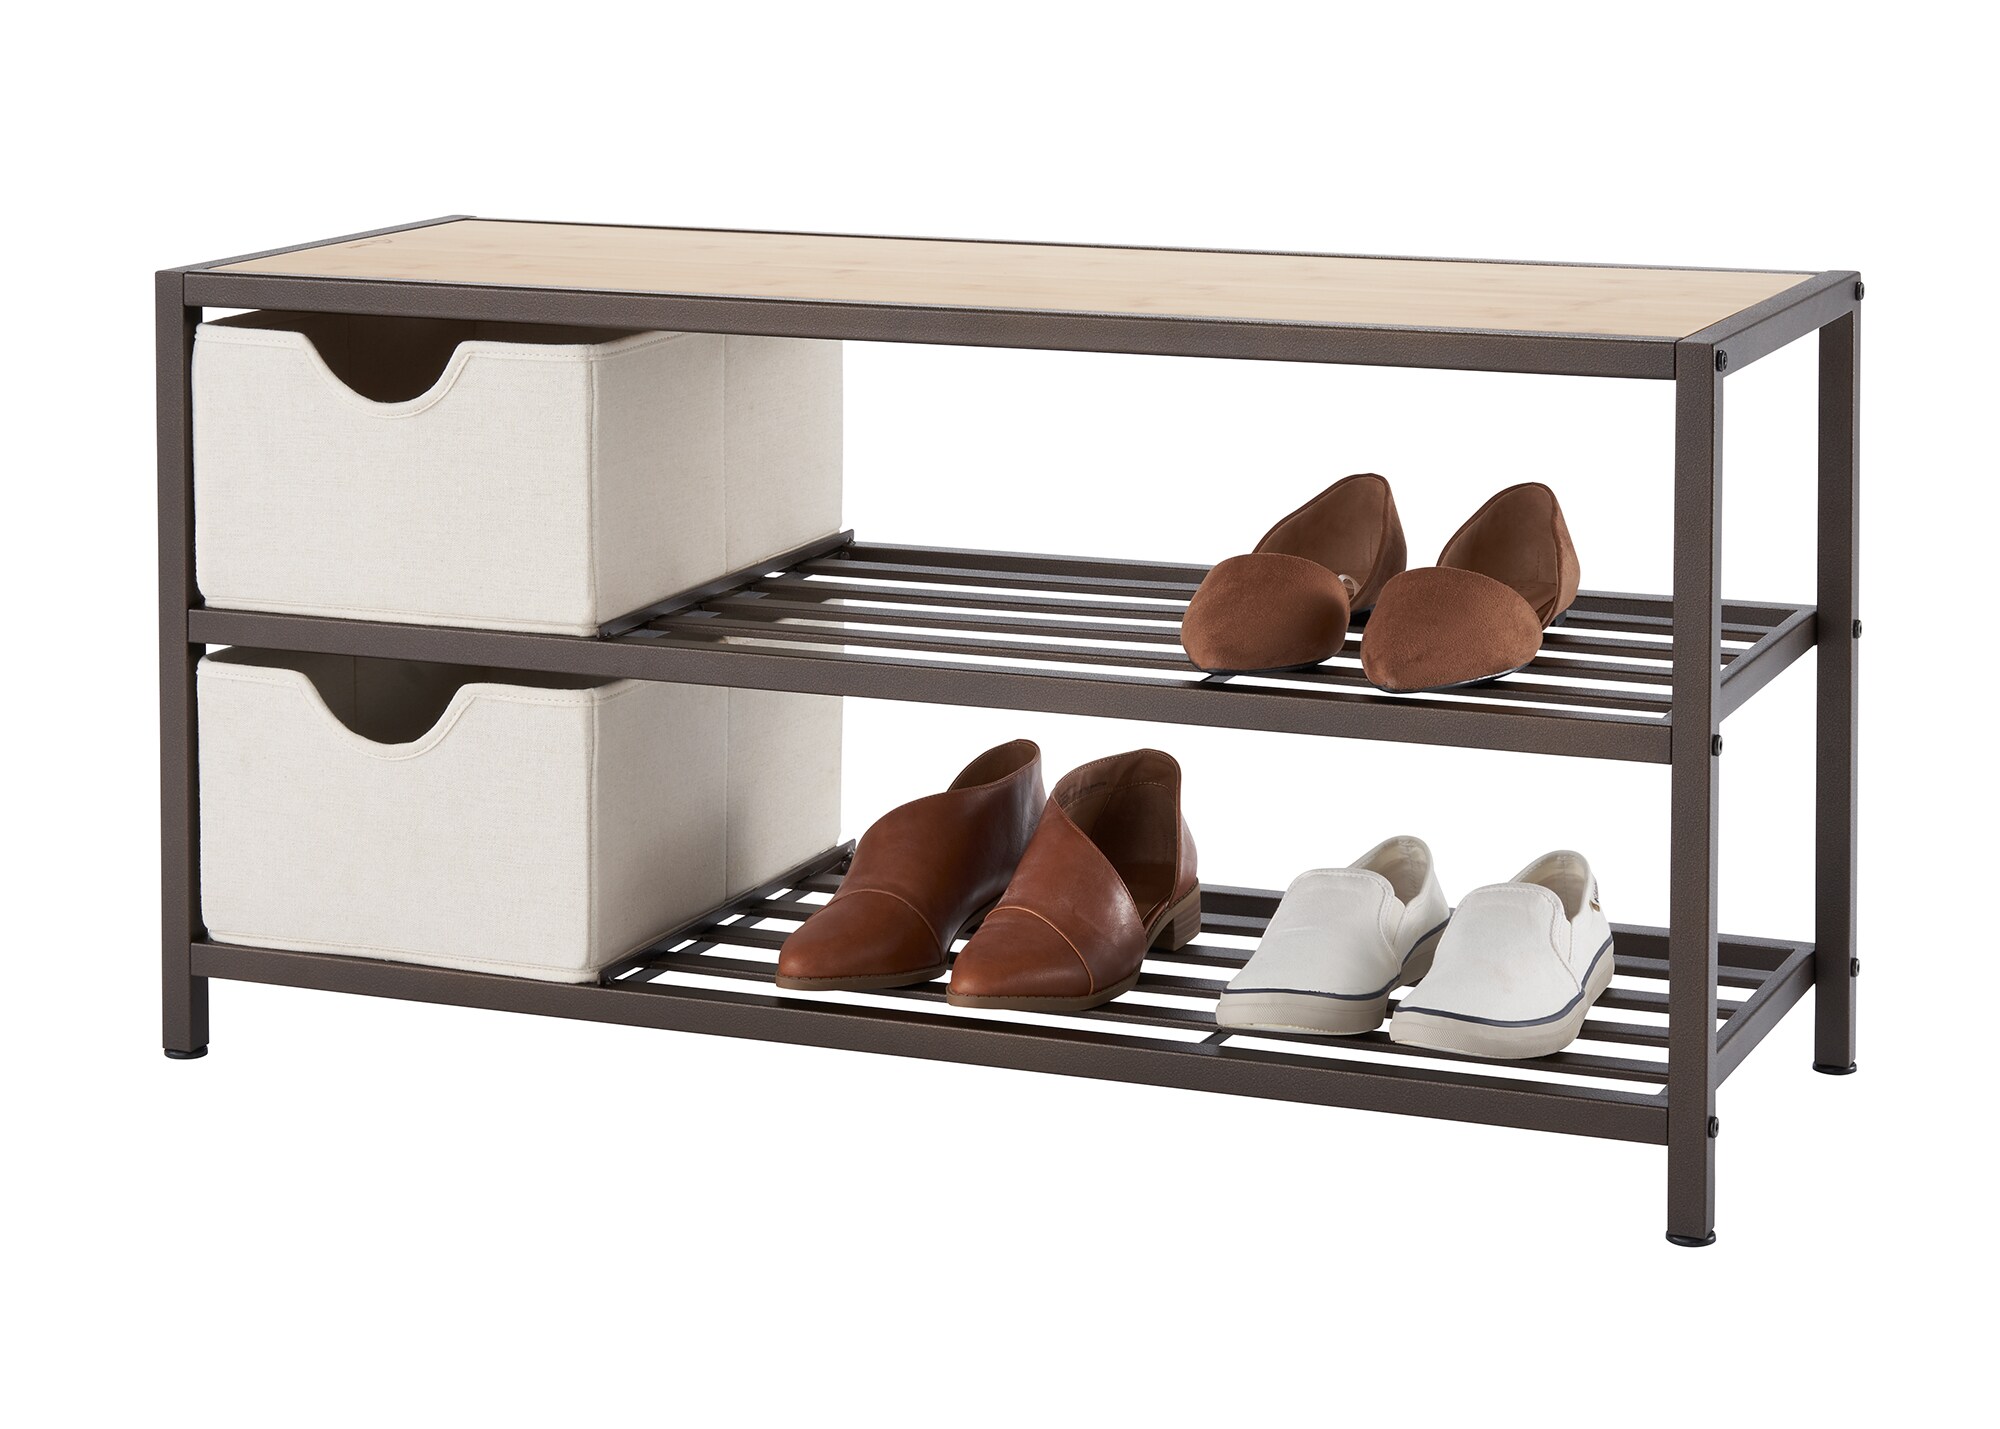 ROJASOP Big Shoe Storage Cabinet with Covers and Doors, 12-Tier